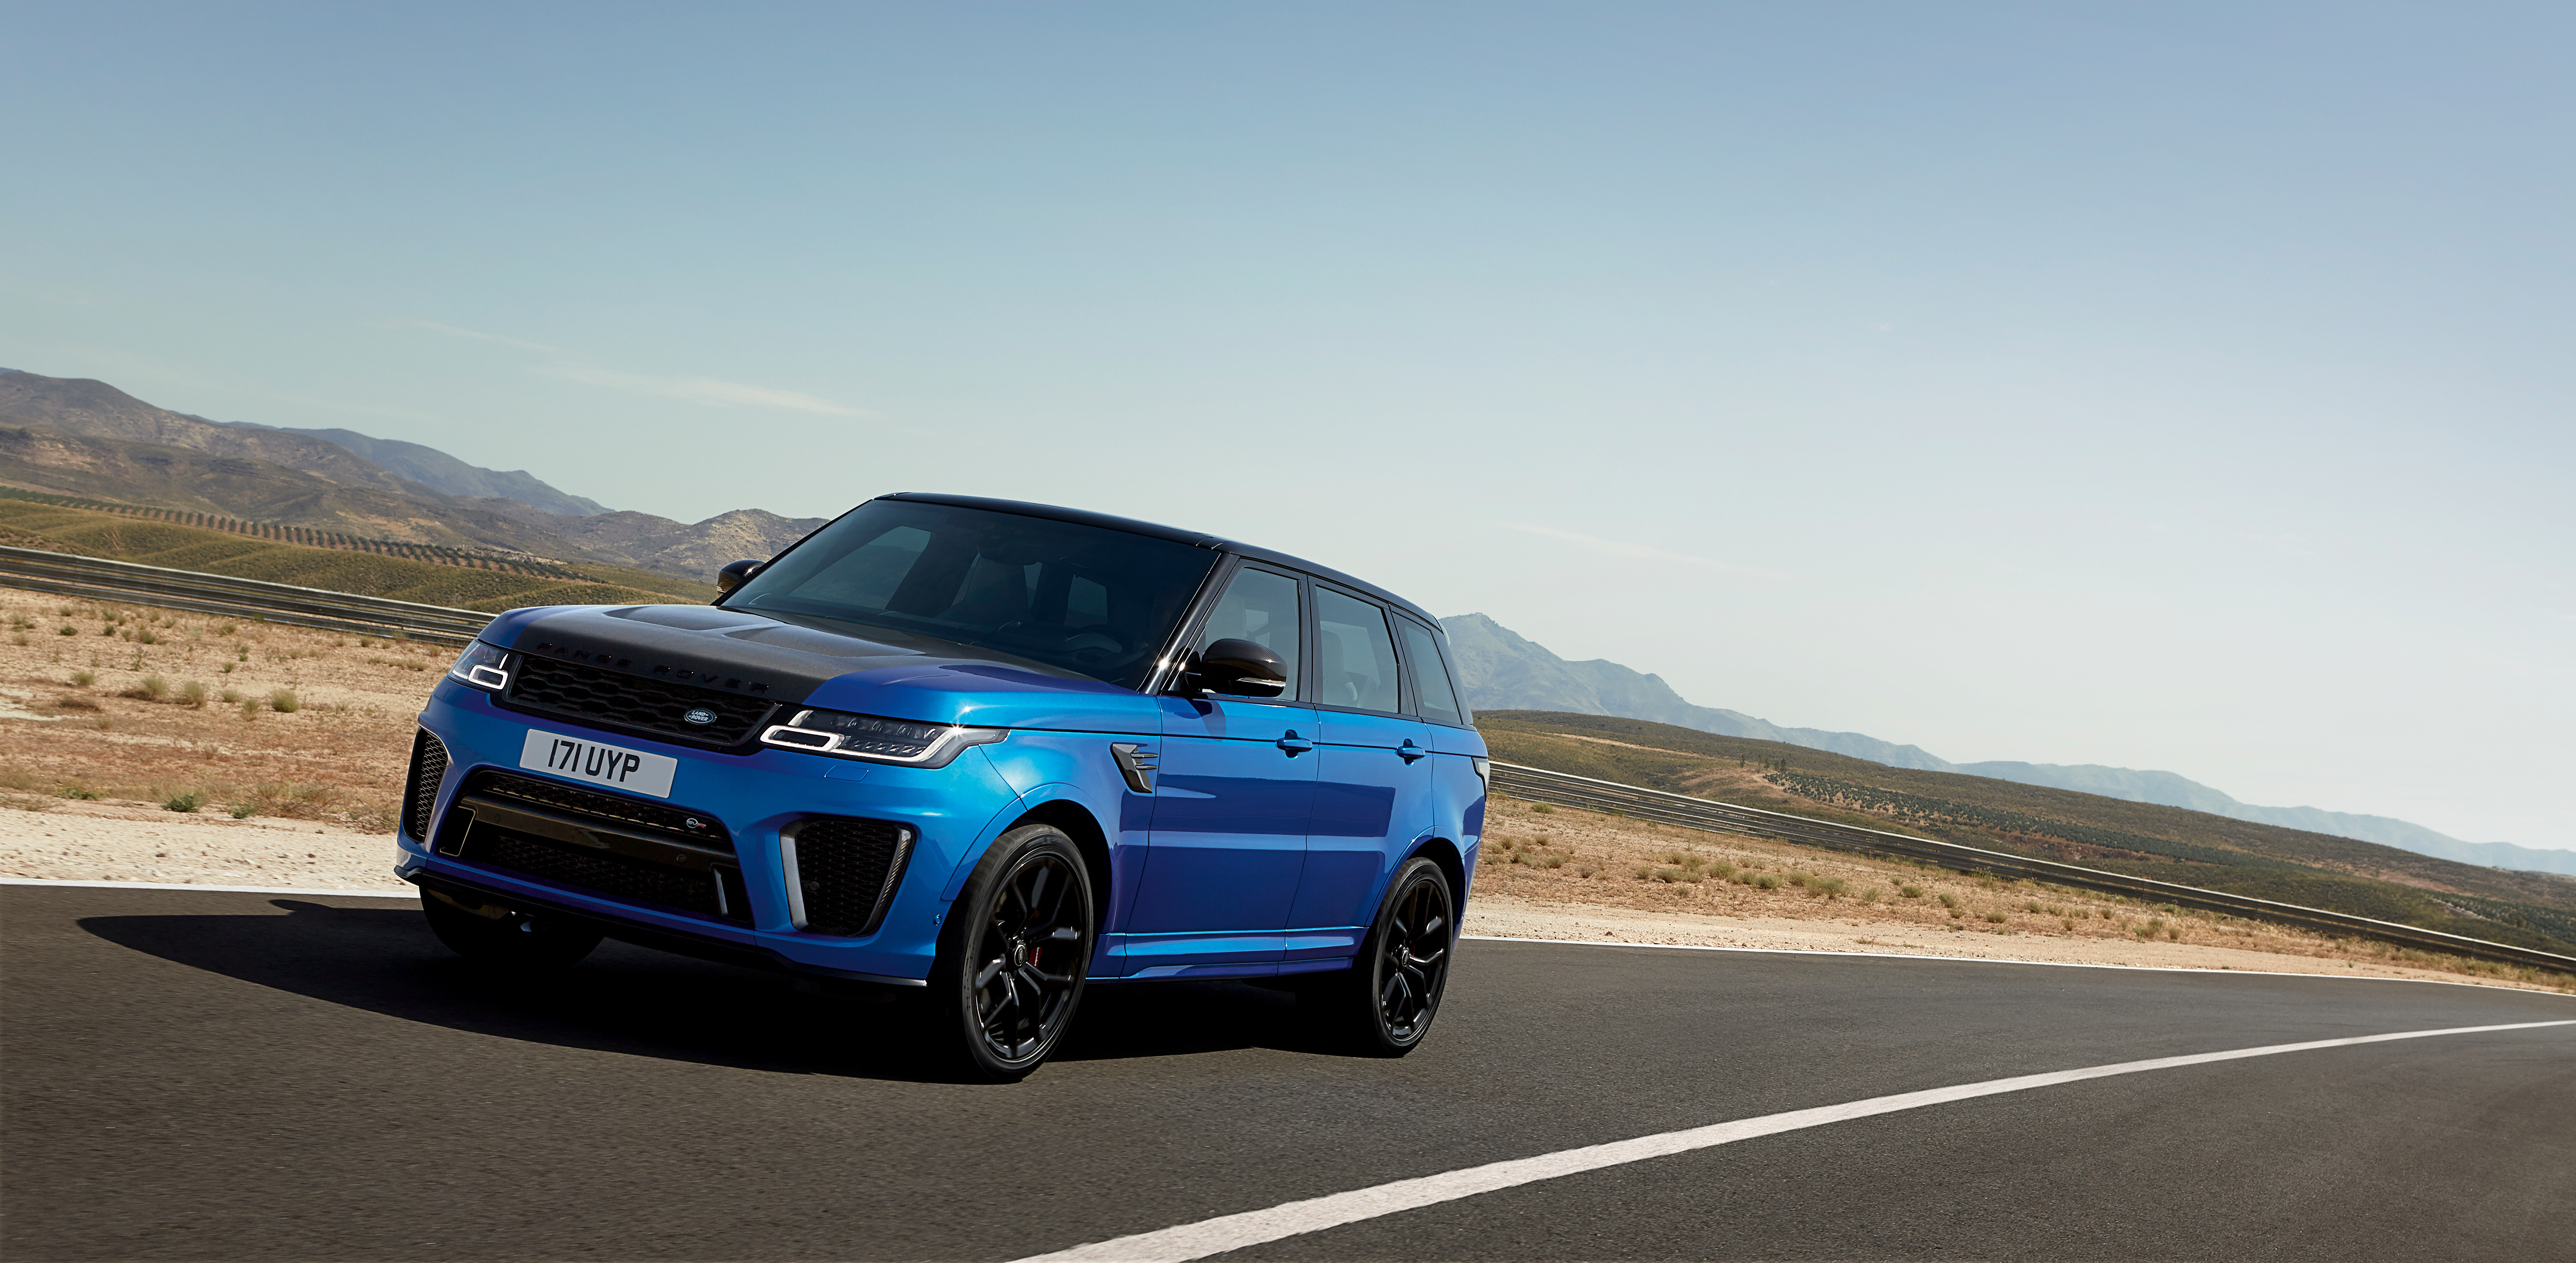 The 2018 Range Rover Sport